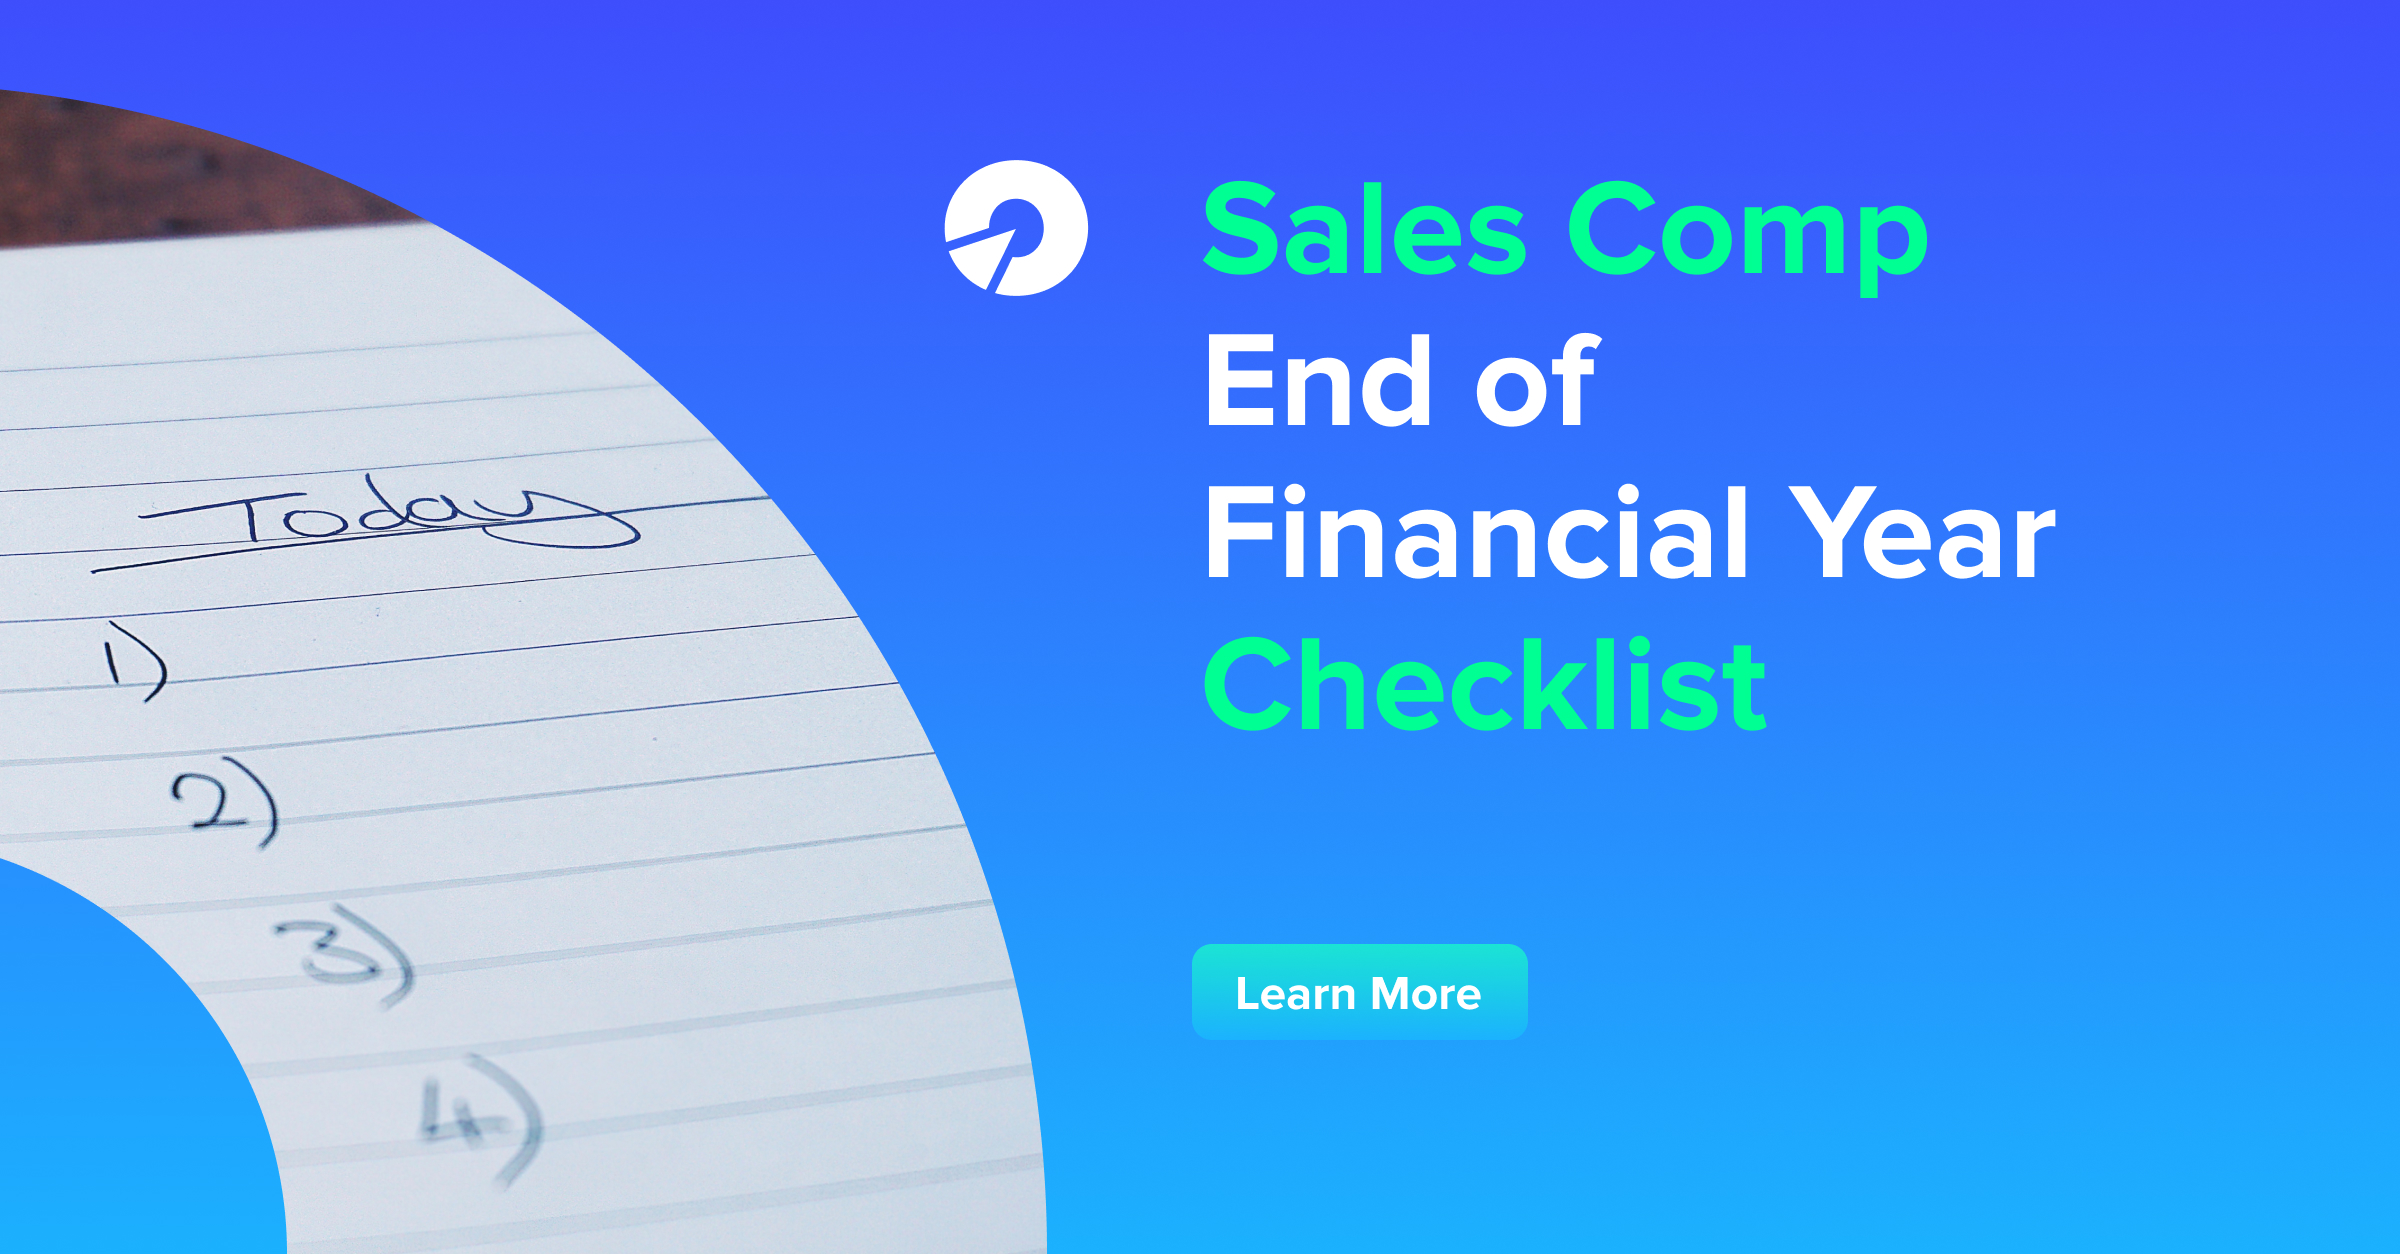 Sales Comp End of Financial Year Checklist